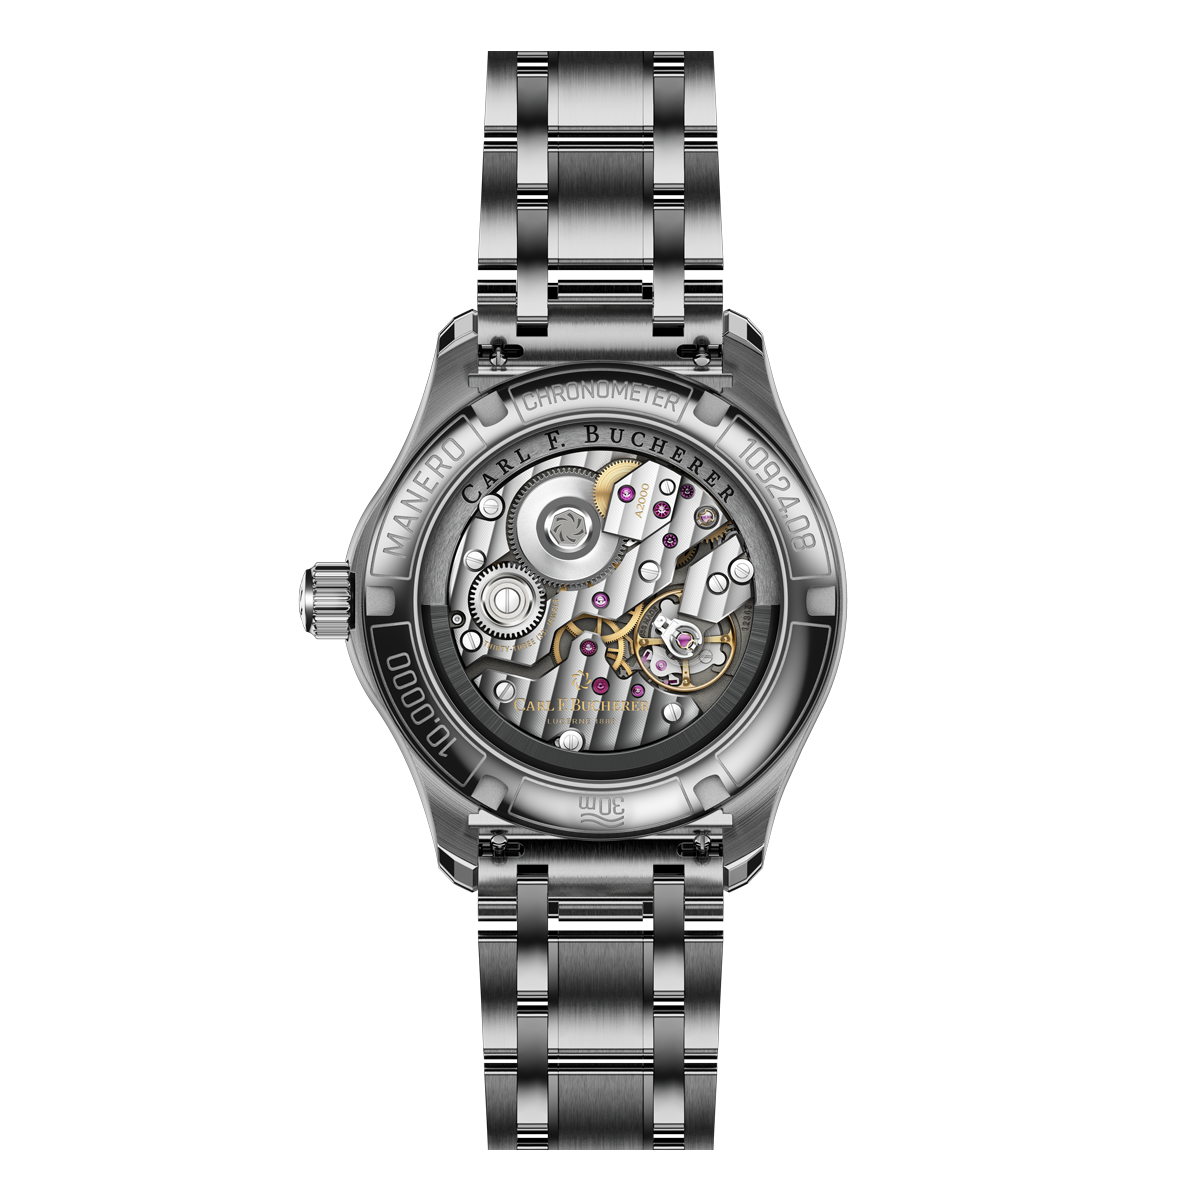 Carl F. Bucherer Manero Chronometer Stainless Steel Men's Watch